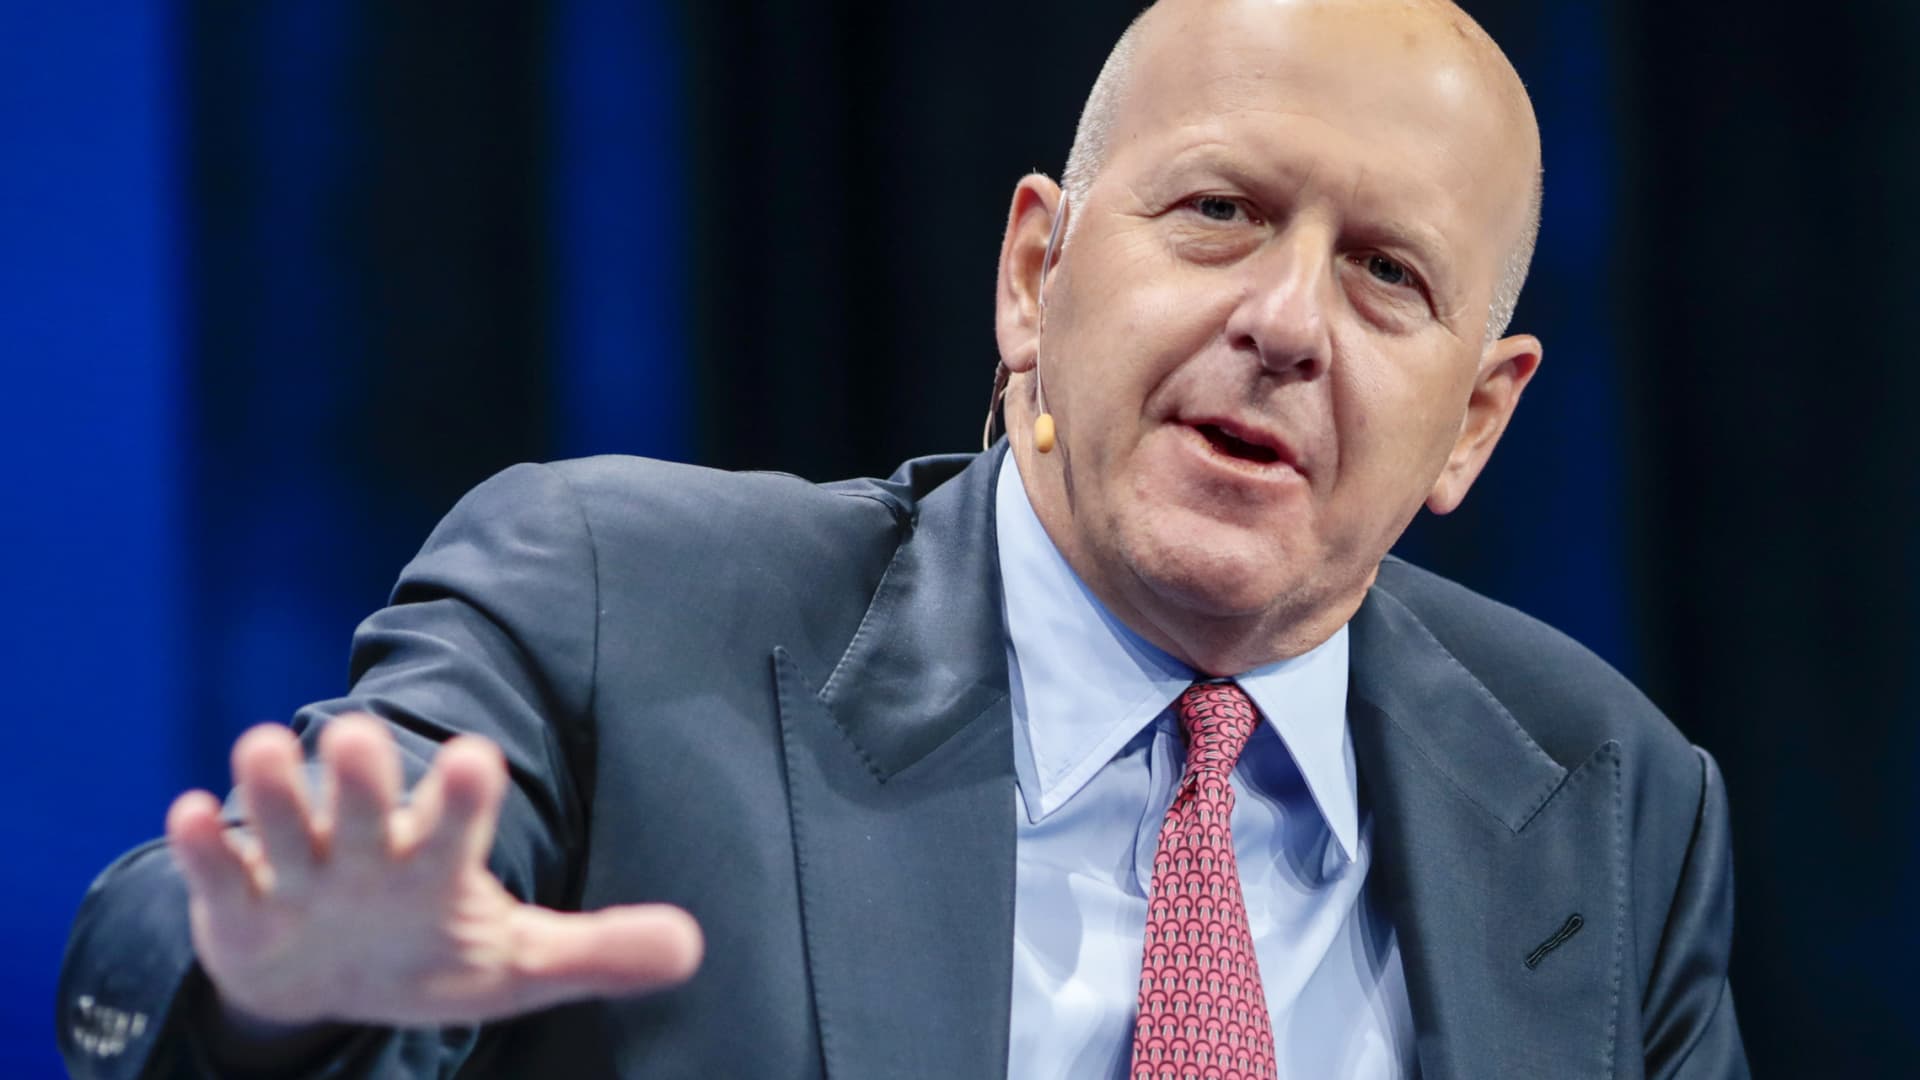 Goldman Sachs warns merchants of shrinking bonus pool as Wall Road hunkers down